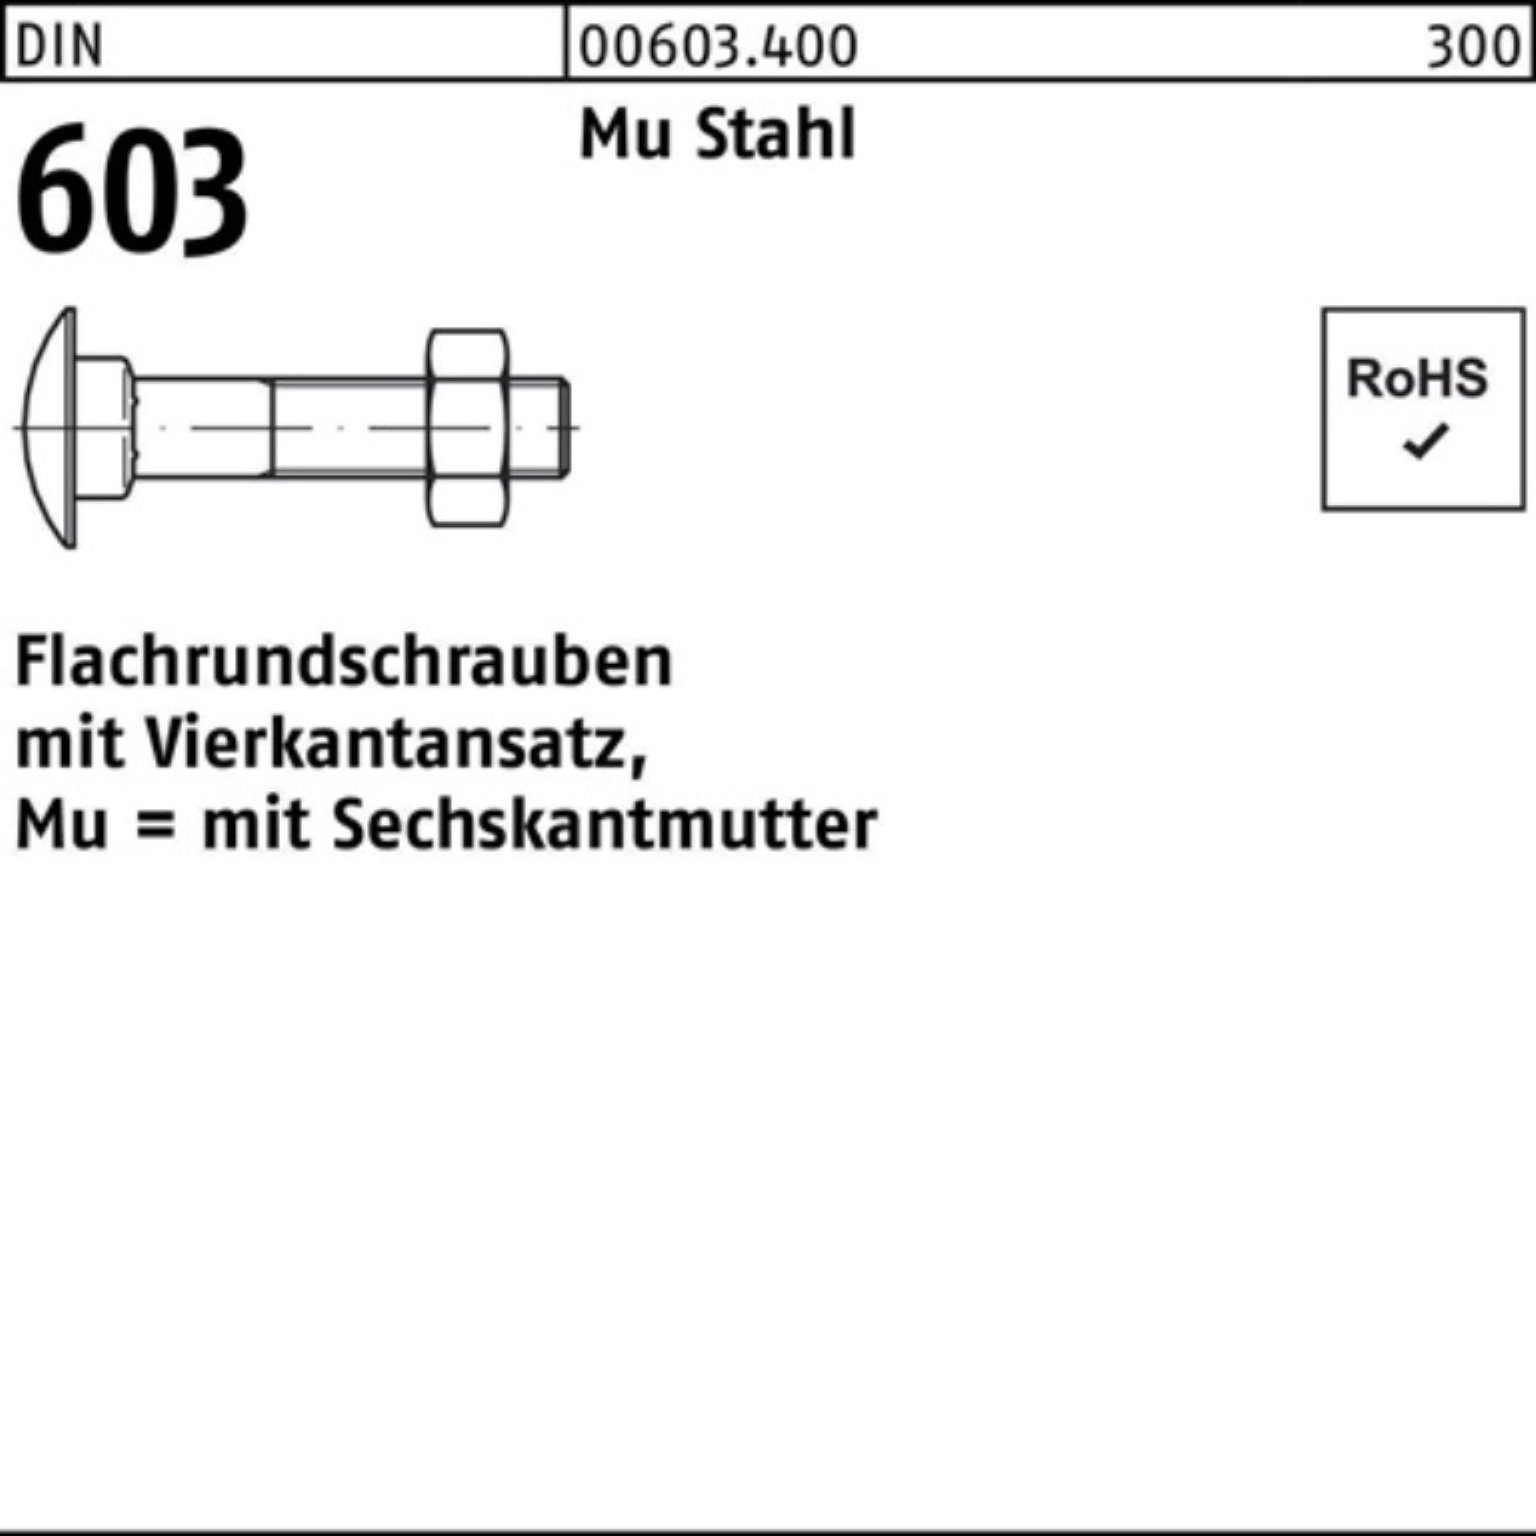 Reyher Schraube 100er M16x140 Flachrundschraube 603 Pack Vierkantansatz/6-ktmutter DIN